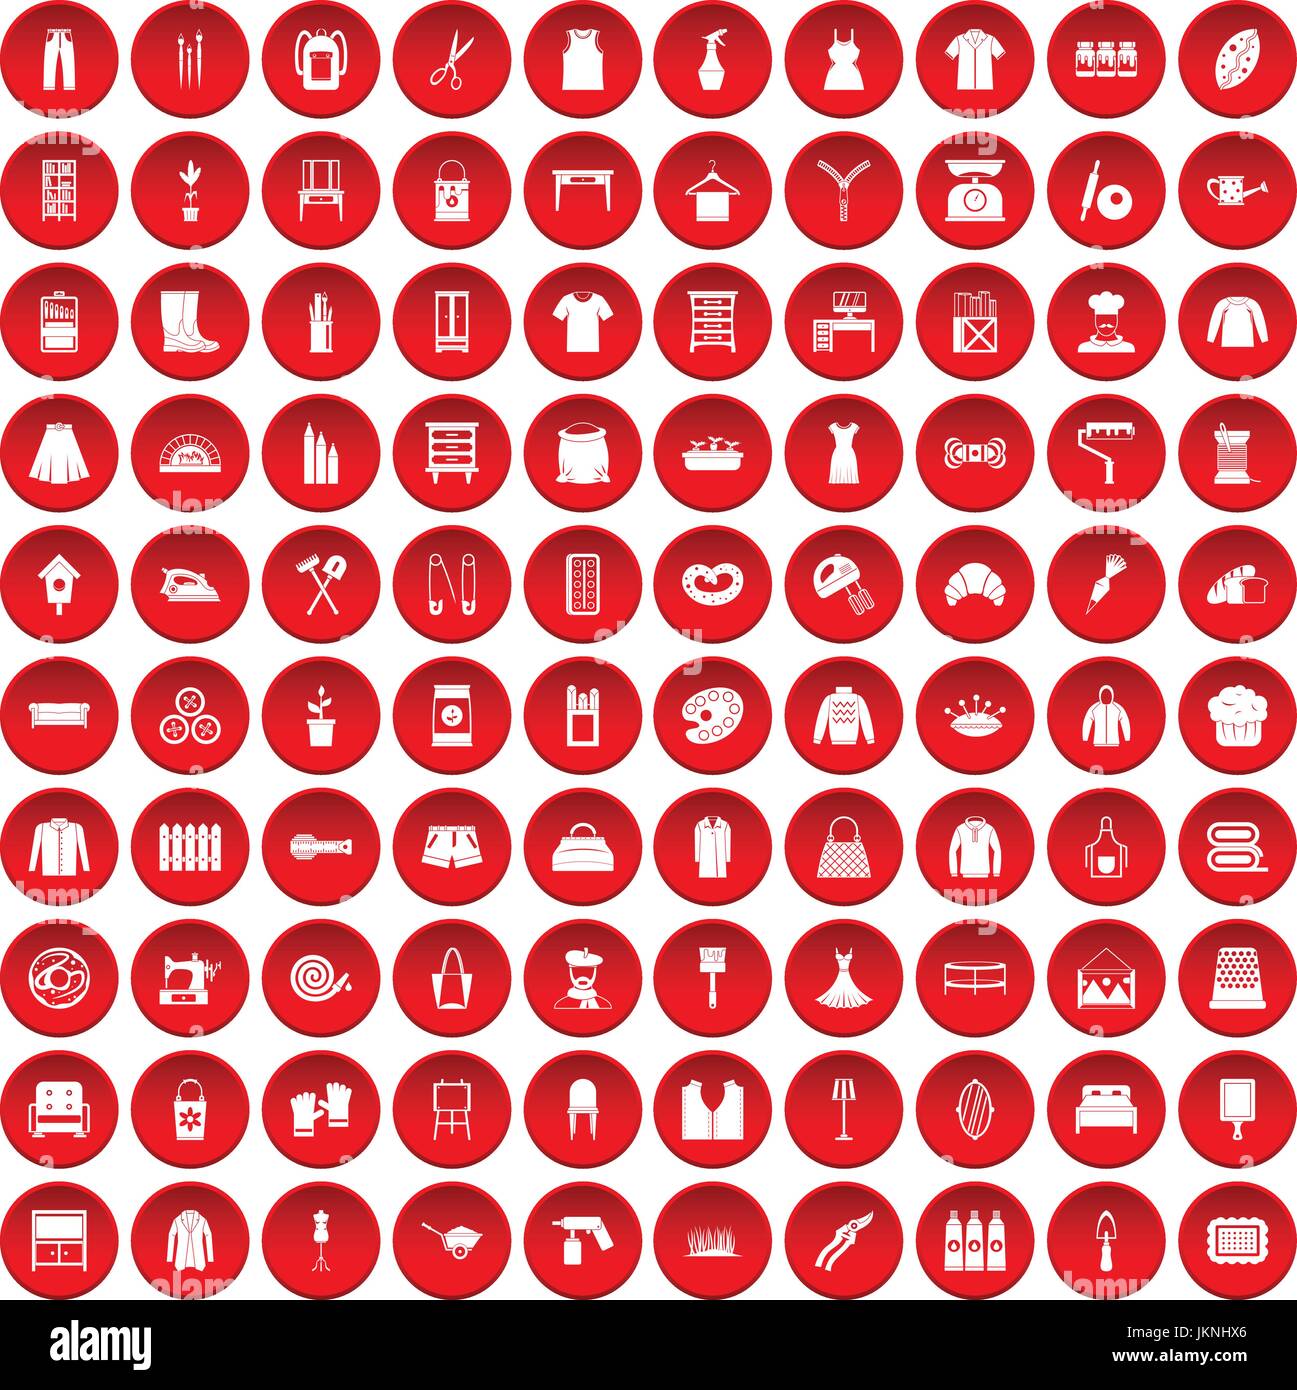 100 Handarbeit Symbole inmitten roter Kreis auf weißem Vektor-Illustration isoliert Stock Vektor